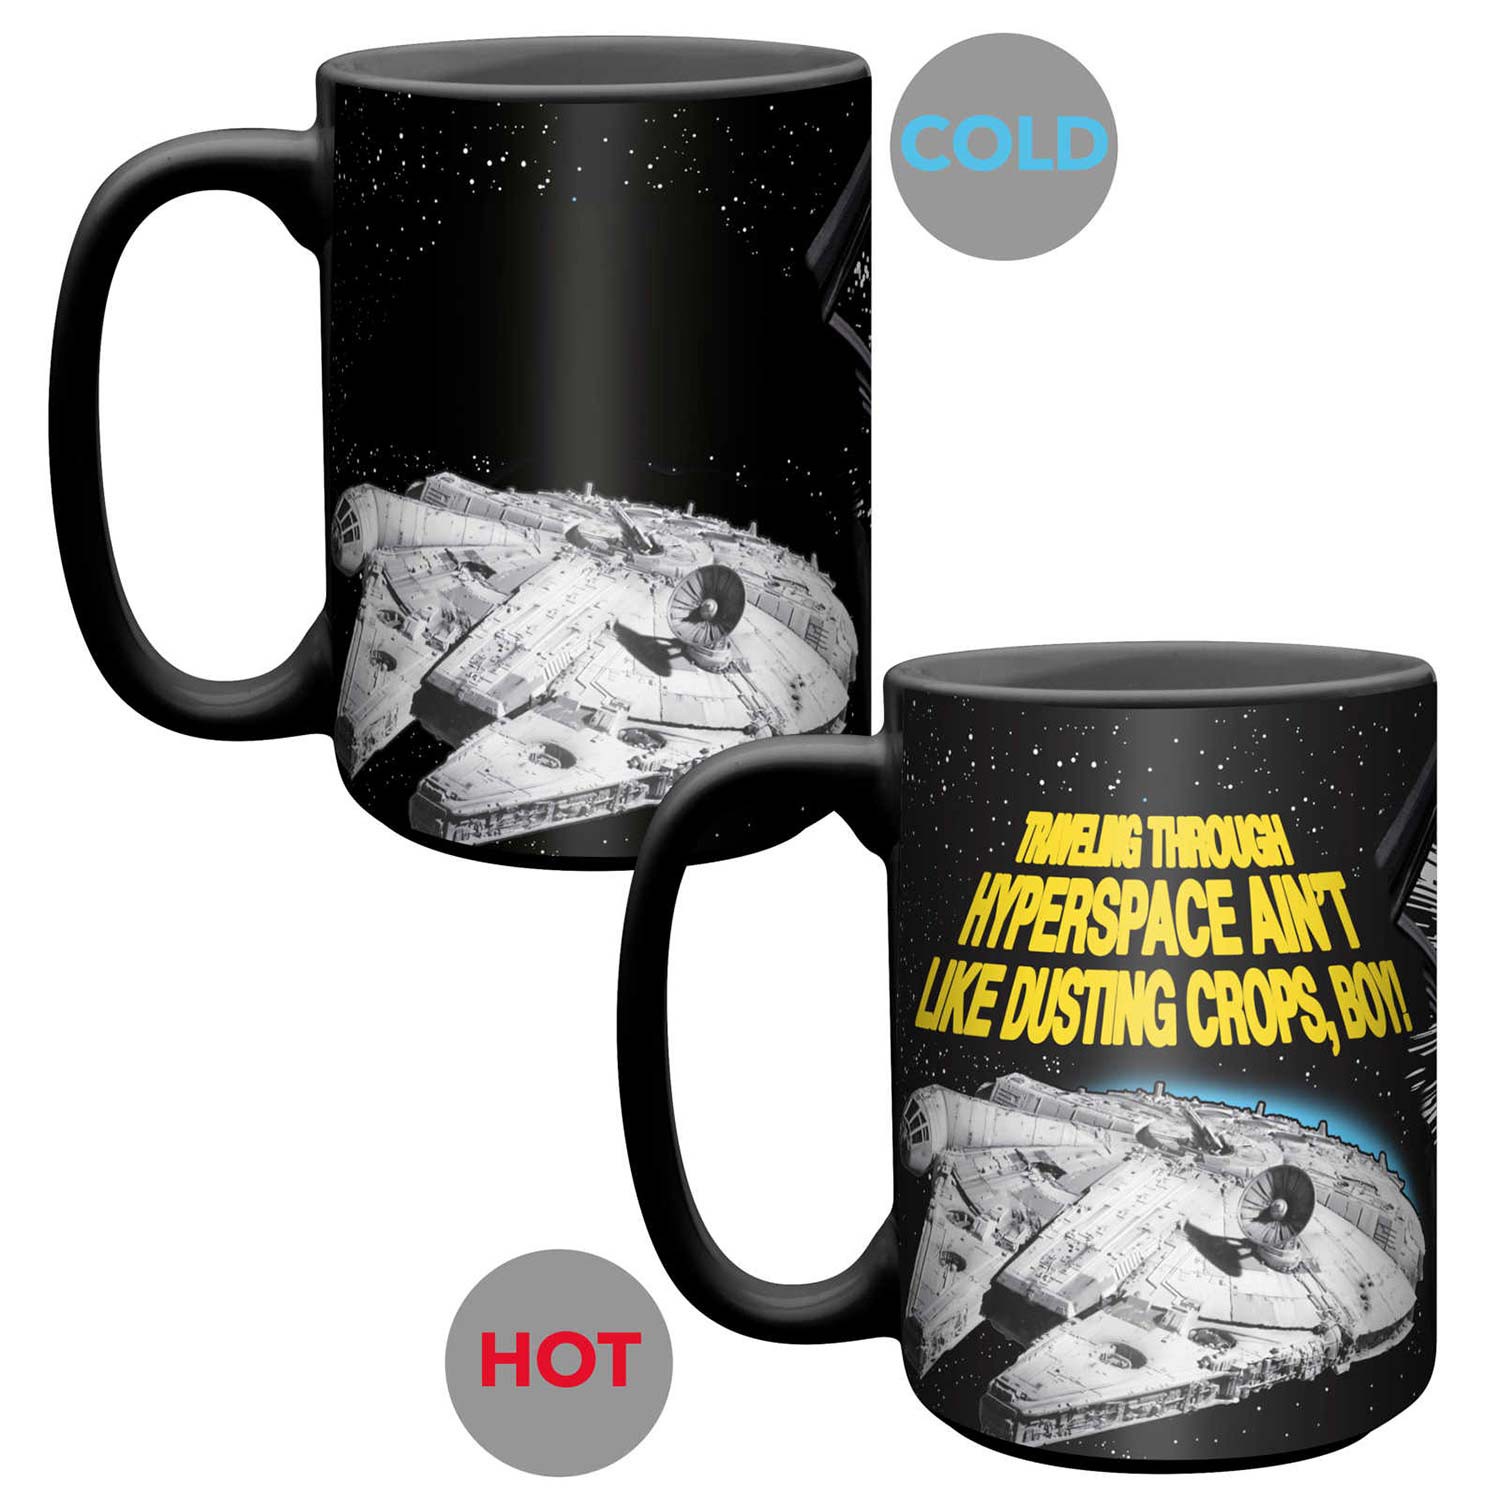 Star Wars Color Changing Millennium Falcon Ceramic Mug